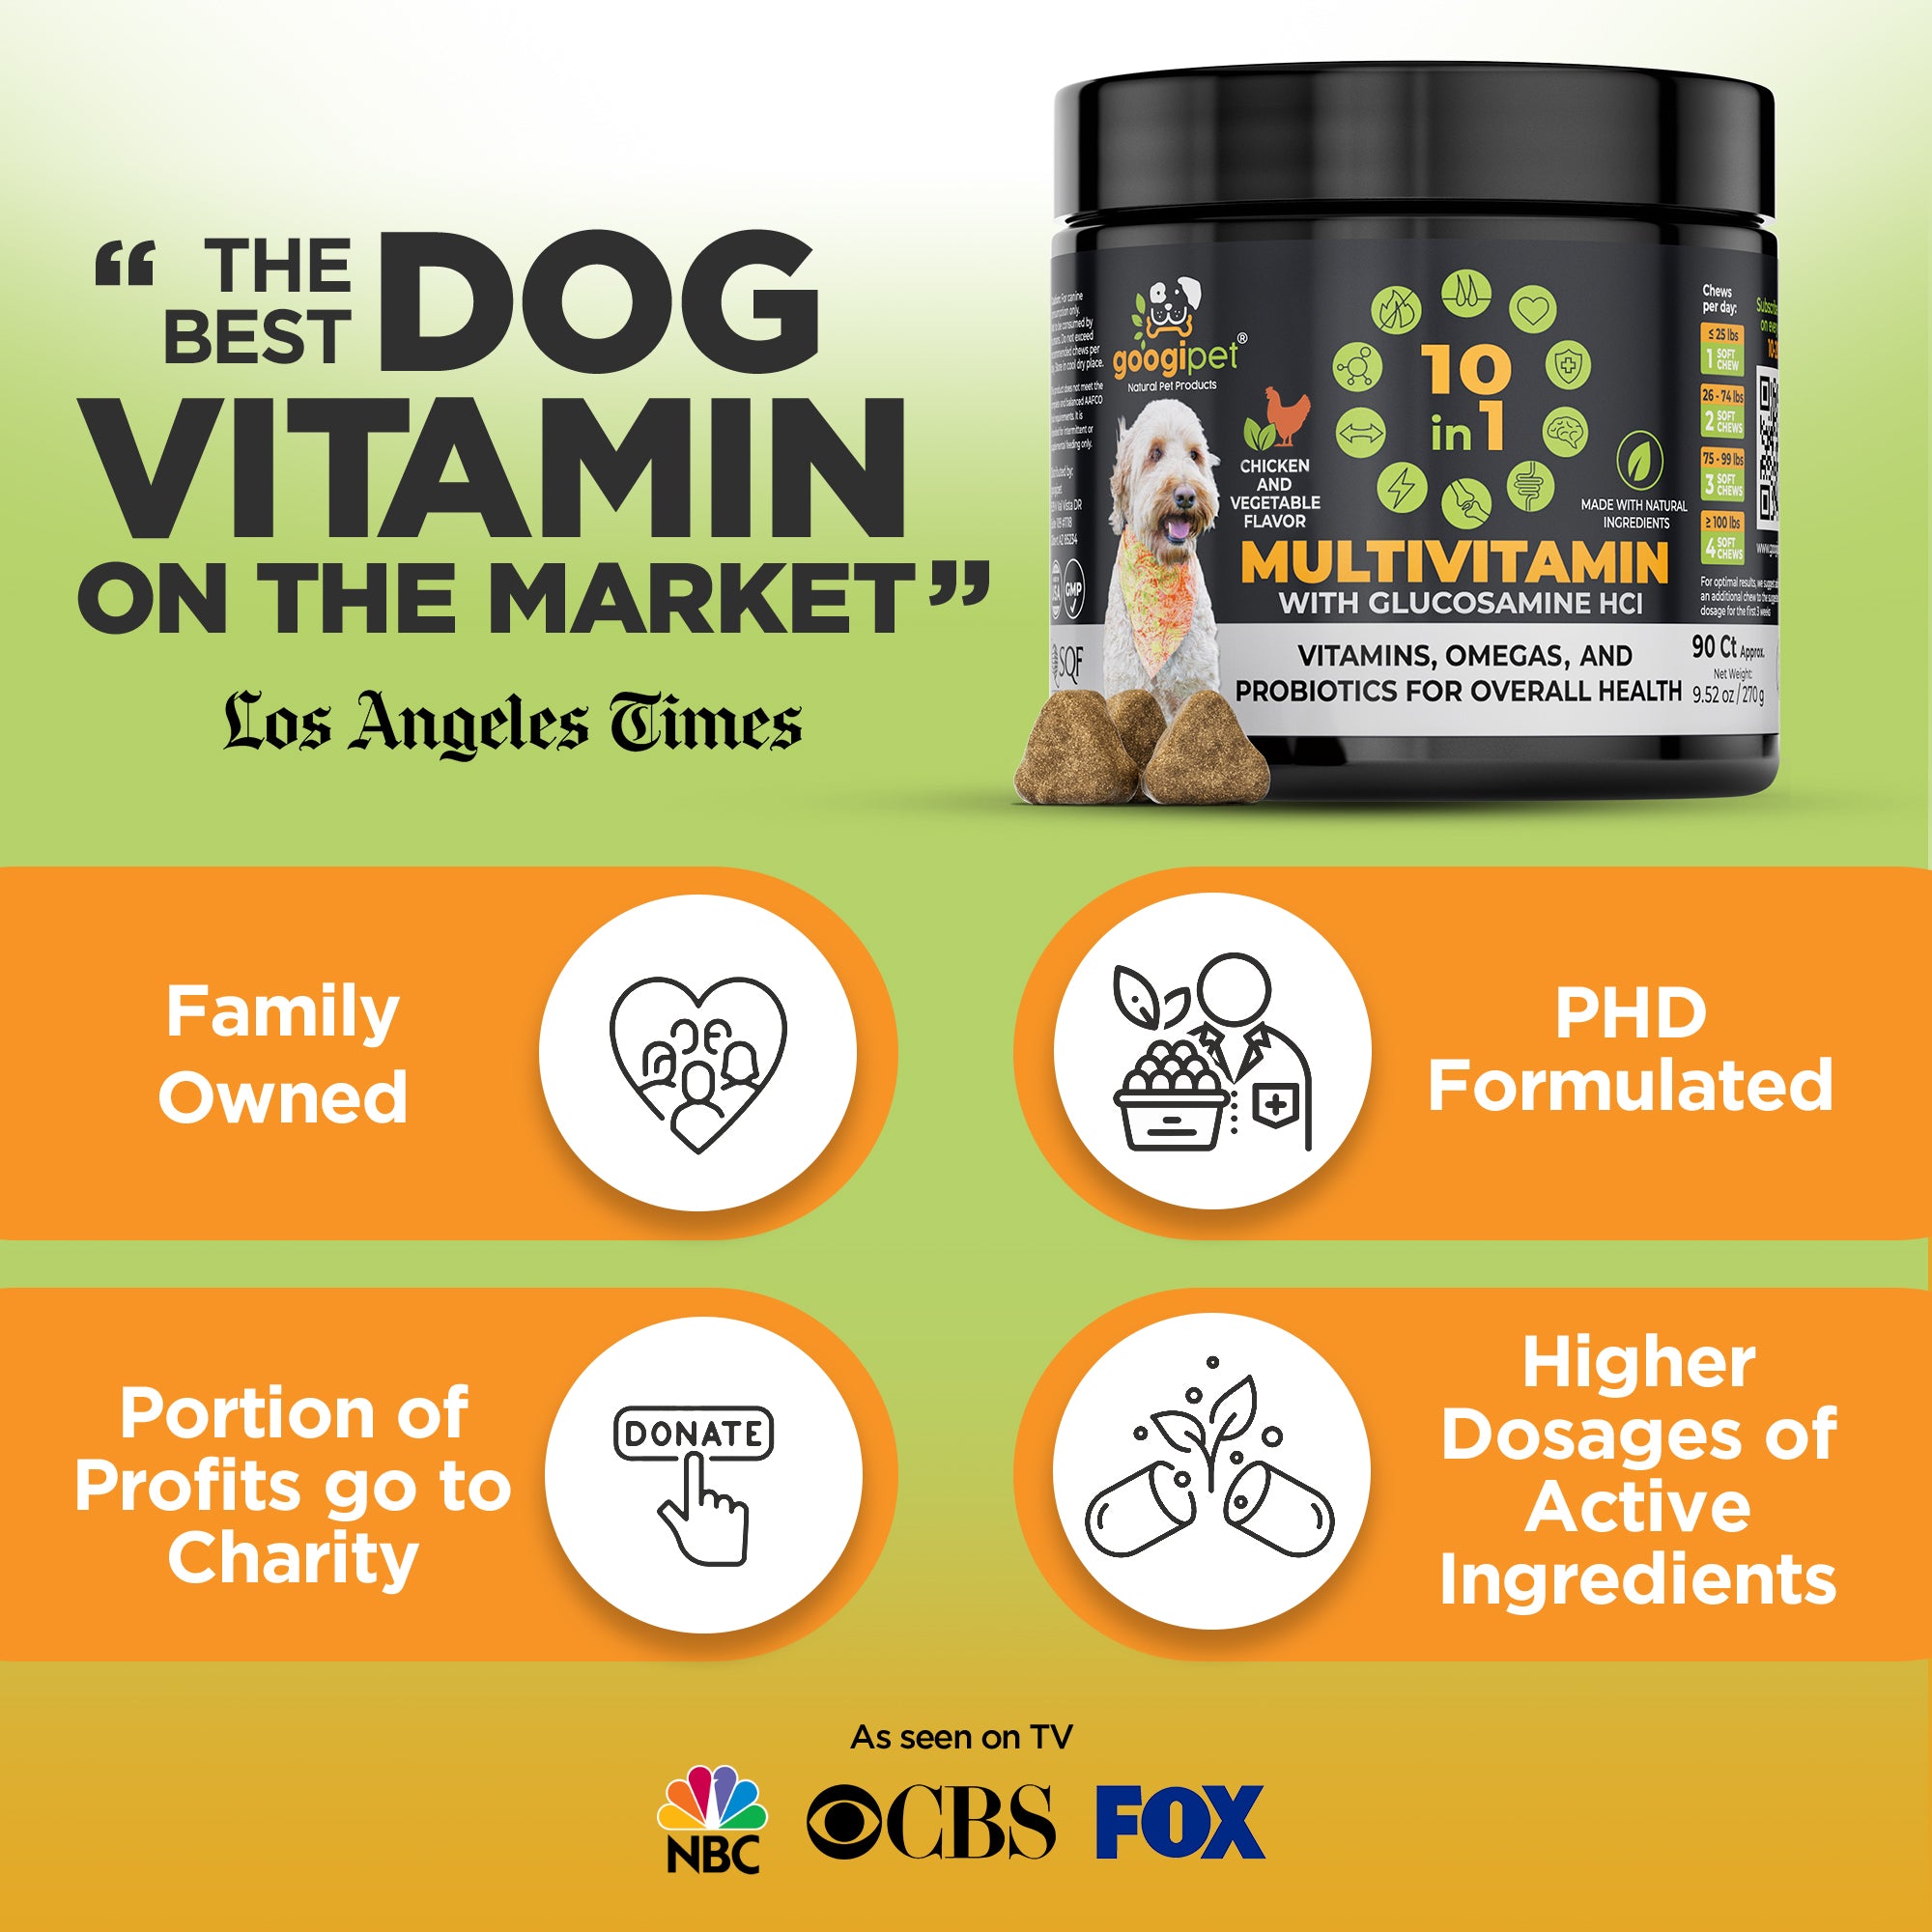 10 in 1 Multivitamin Chews for Dogs (Chicken Flavor)